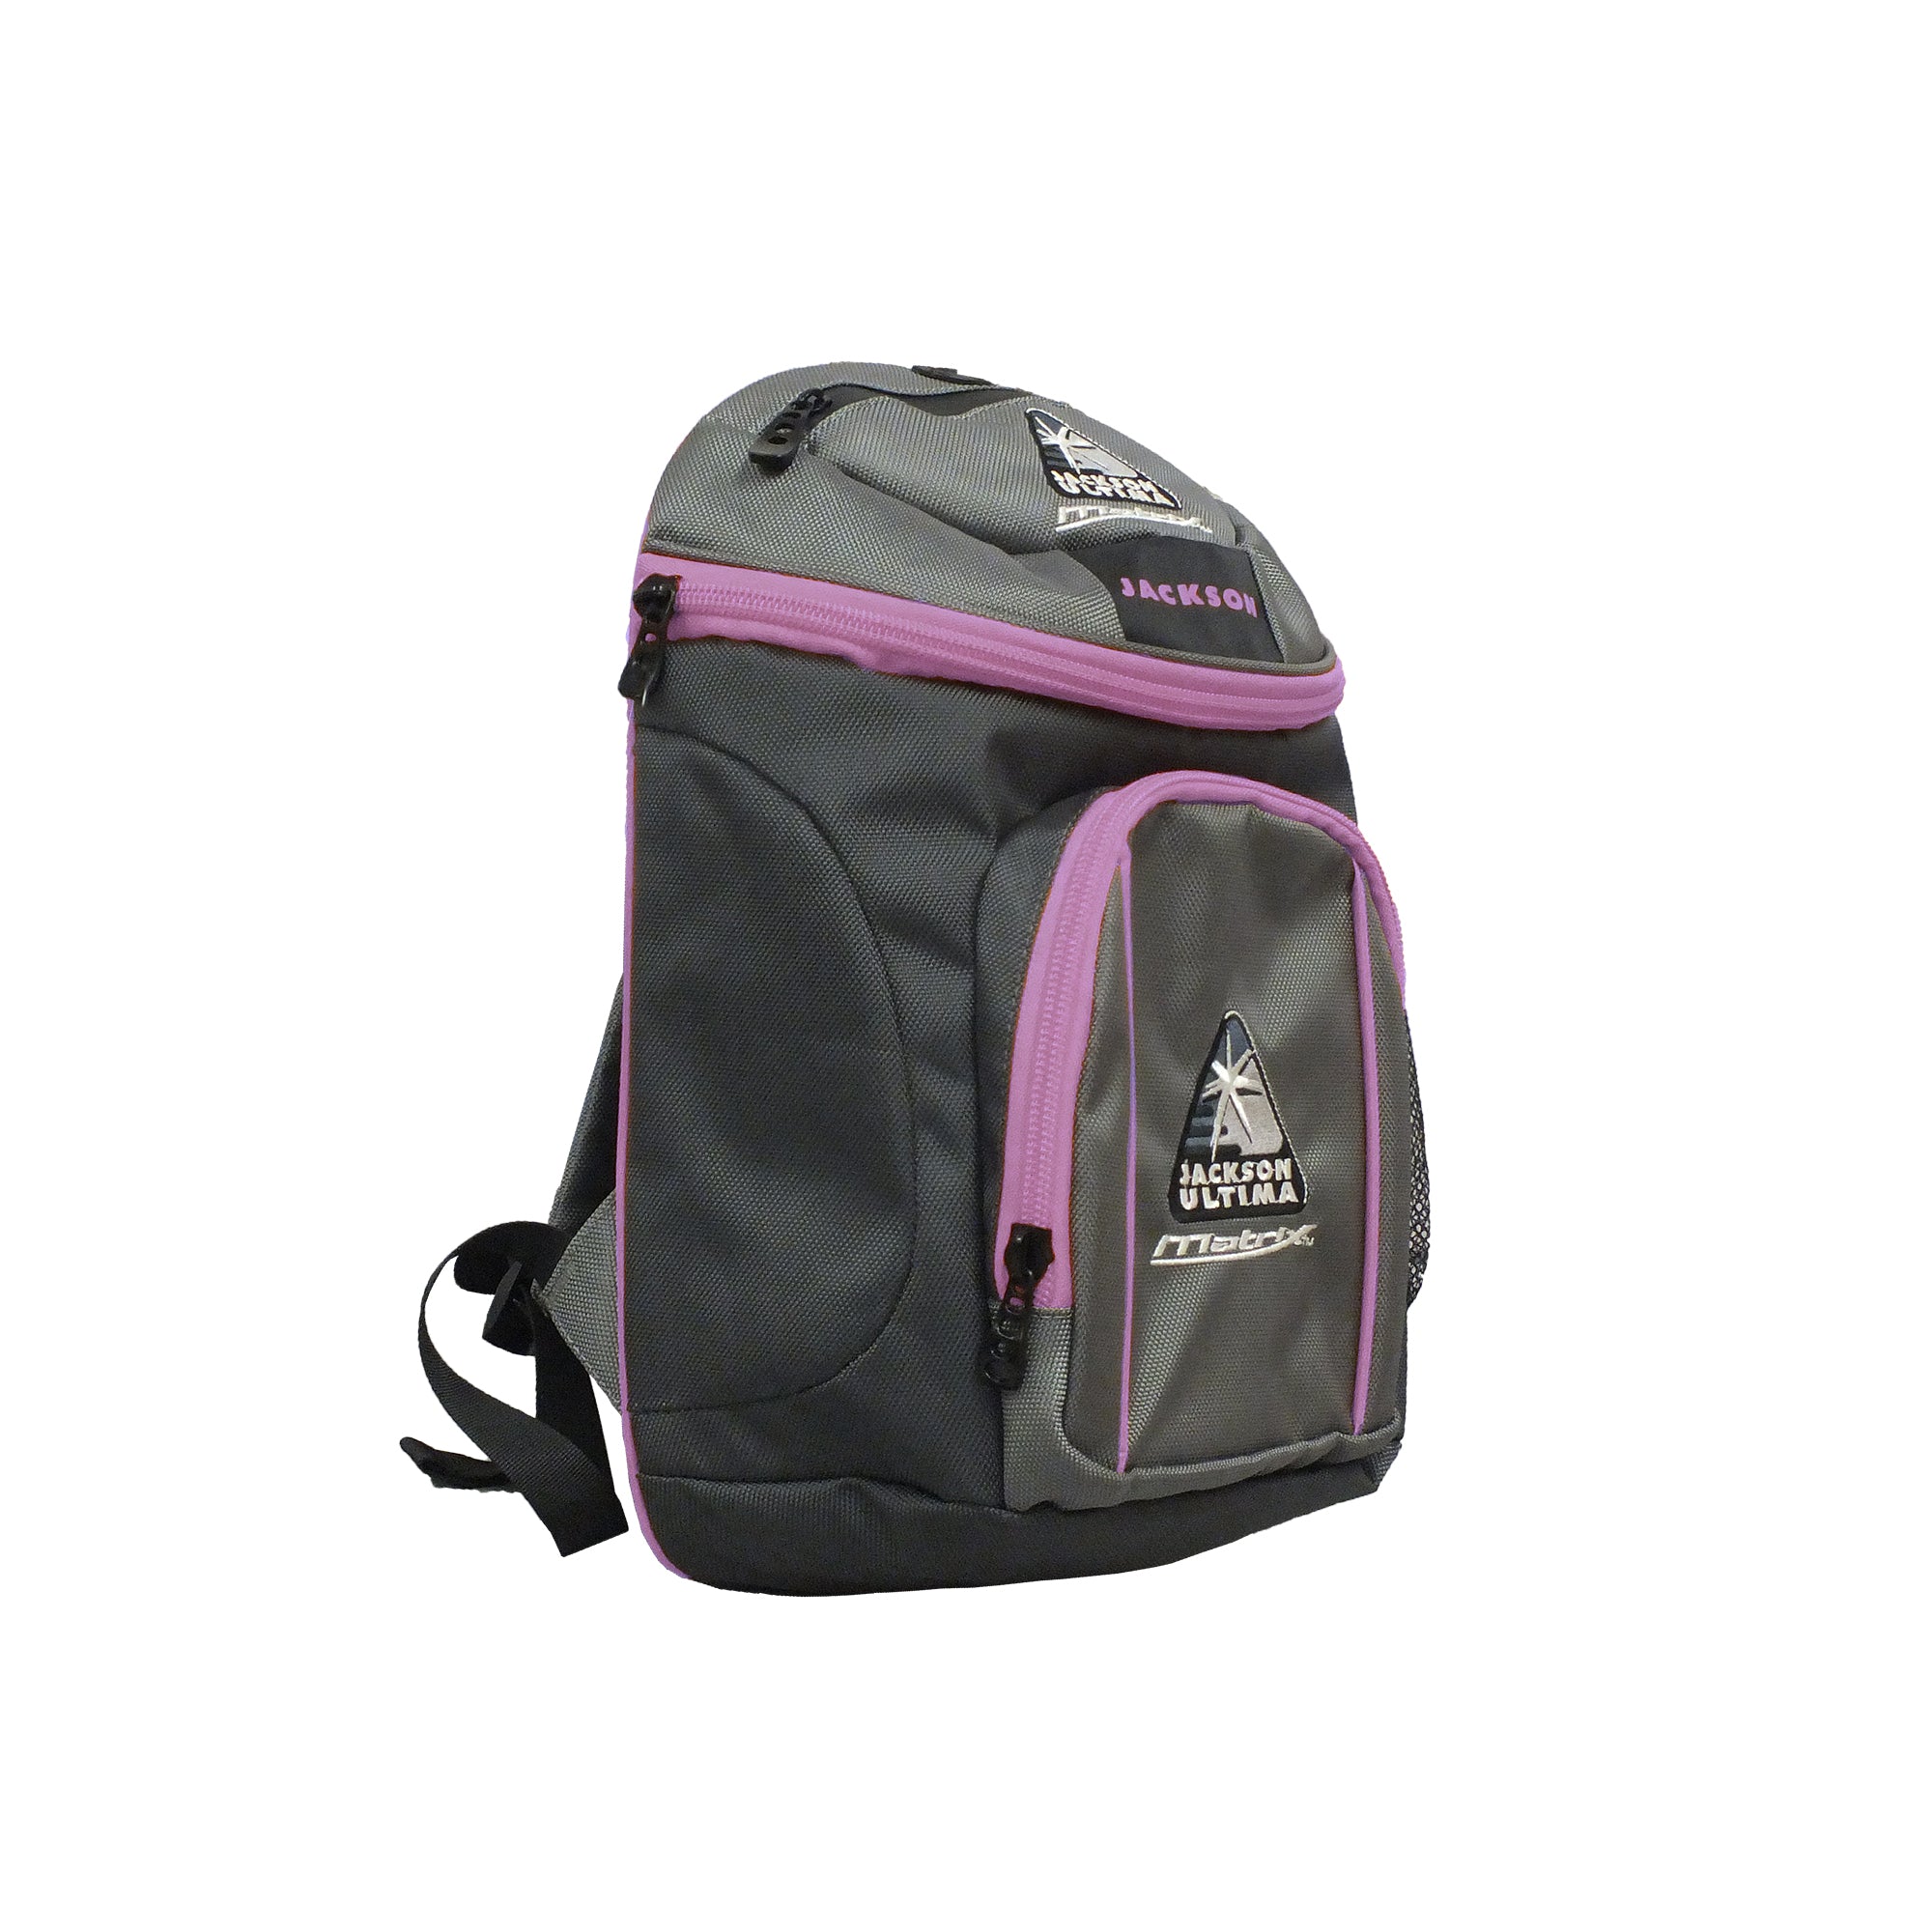 Jackson Ultima Sports Backpack<br> (Black/Purple)